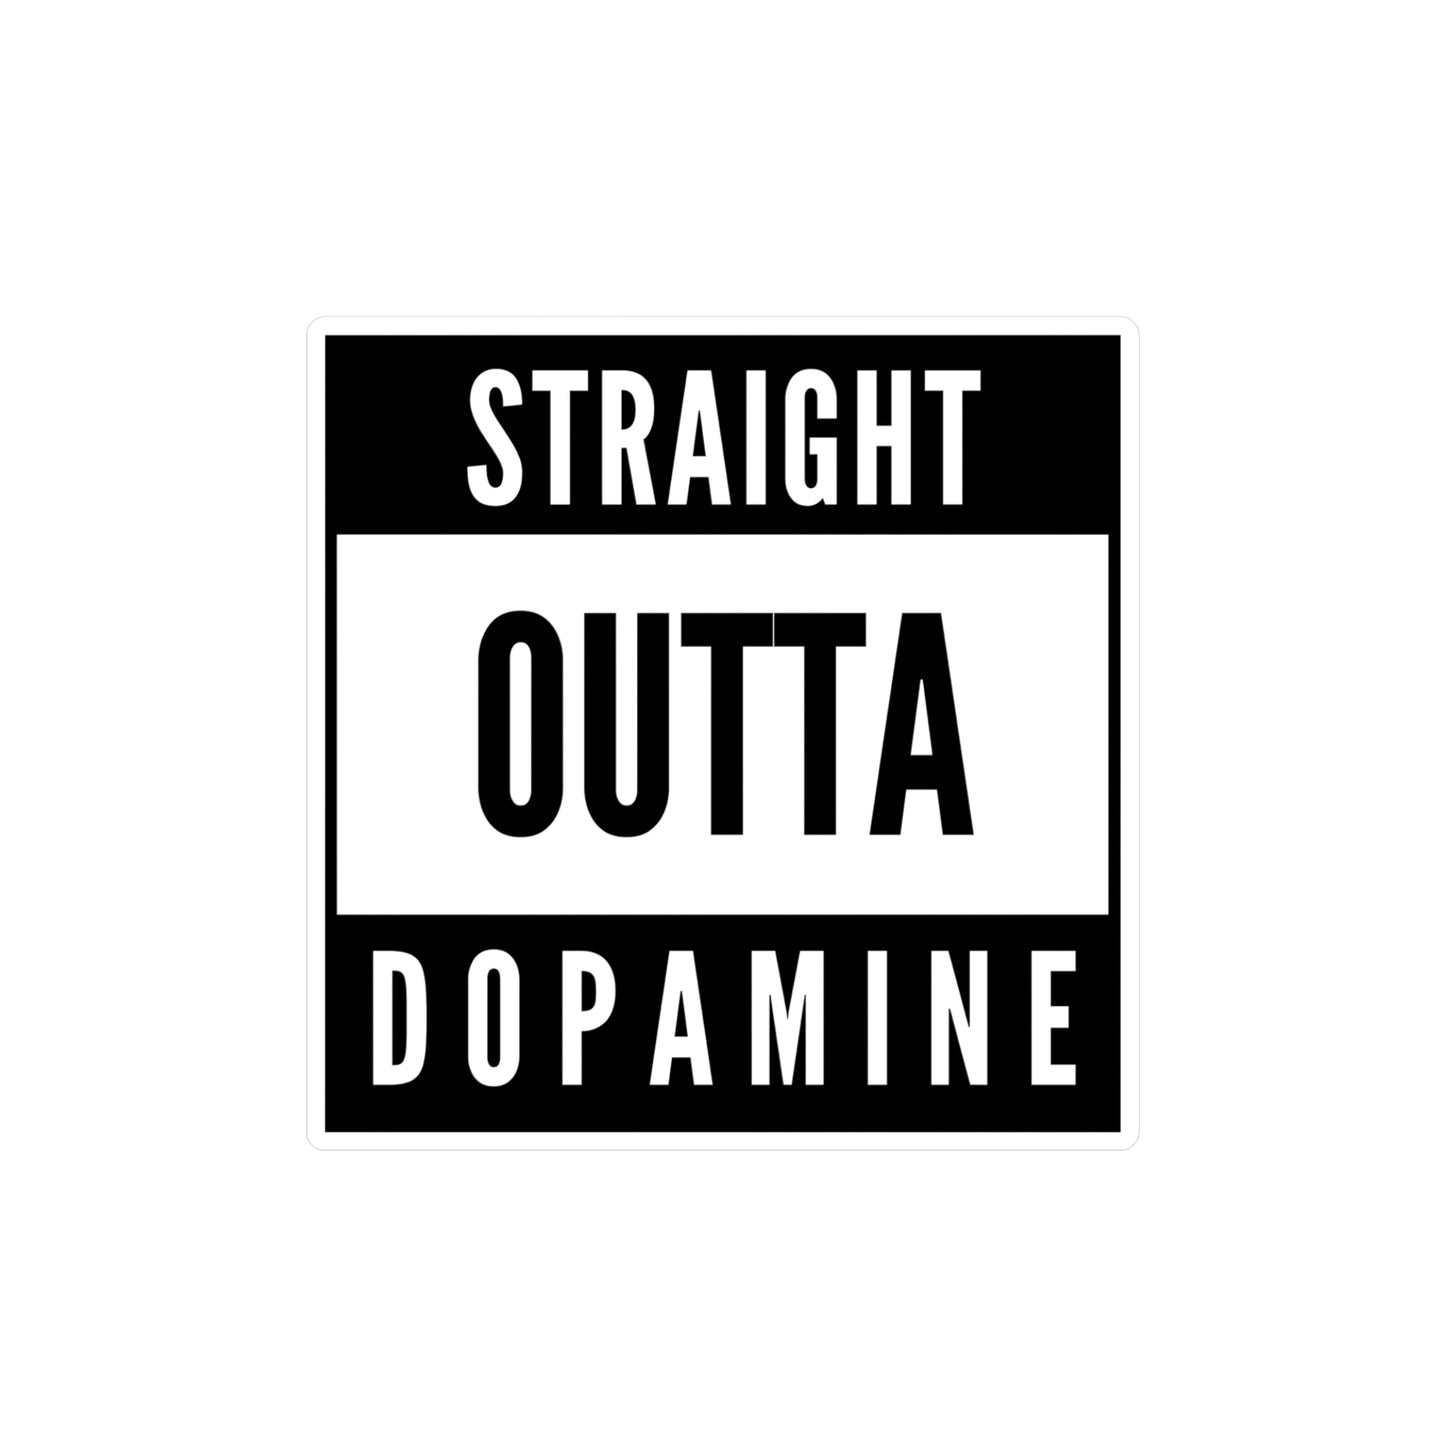 "Straight Outta Dopamine" Kiss-Cut Vinyl Decals